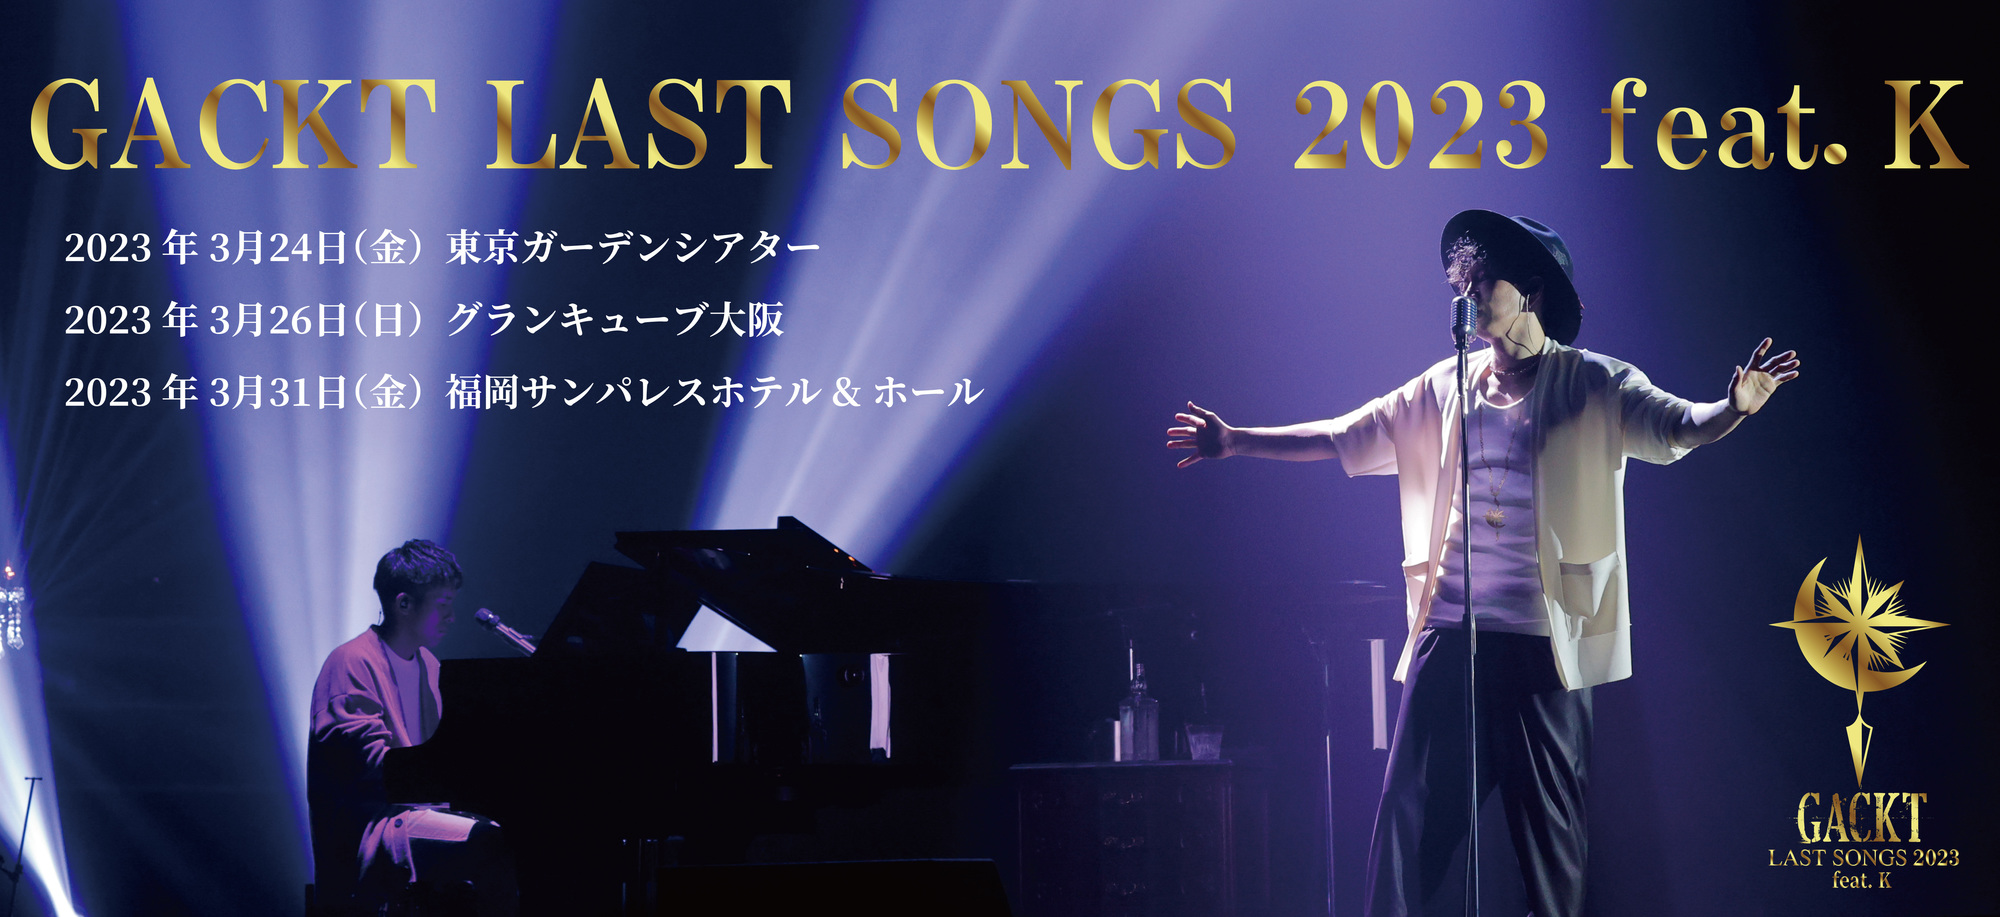 GACKT LAST SONGS 2023 feat. K オフィシャルサイト先行 | GACKT